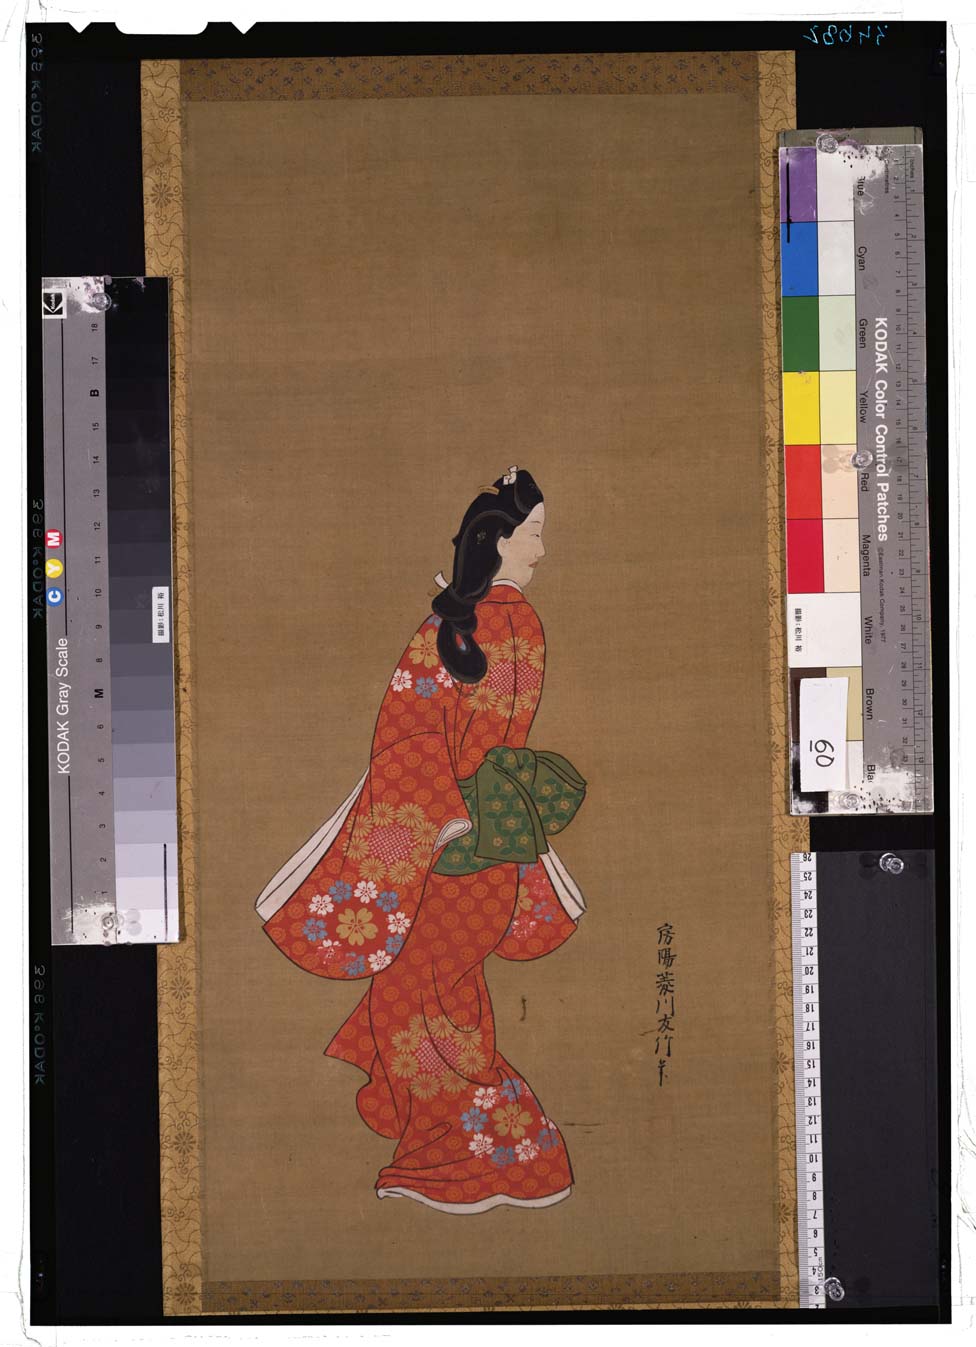 C 見返り美人図 東京国立博物館 画像検索